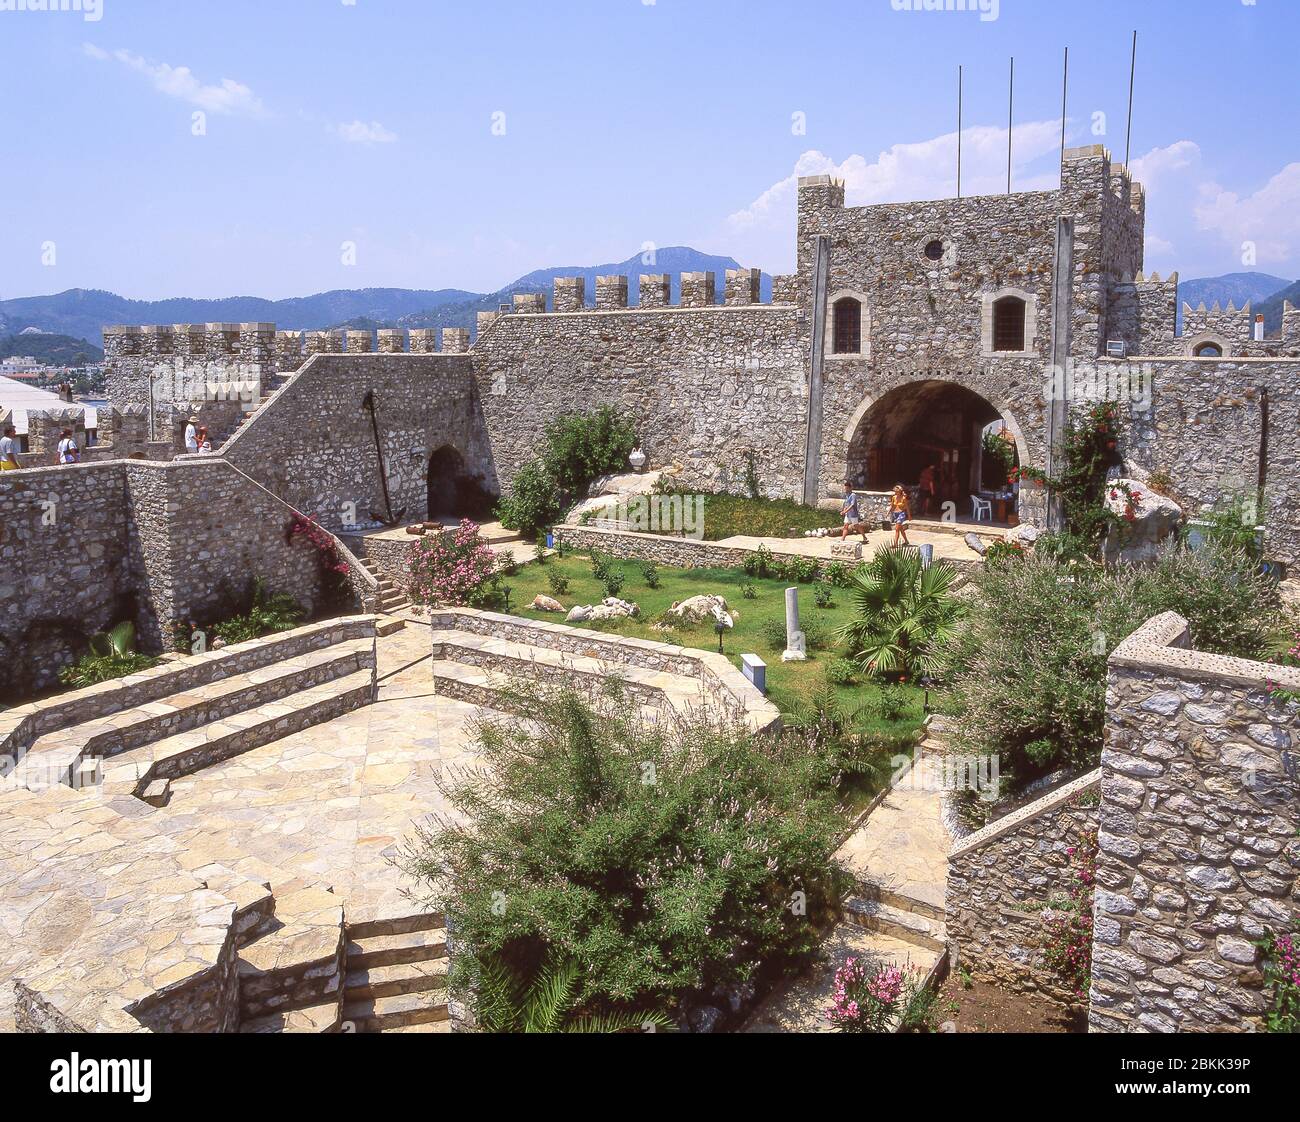 Courtyard of Marmaris Castle, Marmaris, Mulga Province, Republic of Turkey Stock Photo